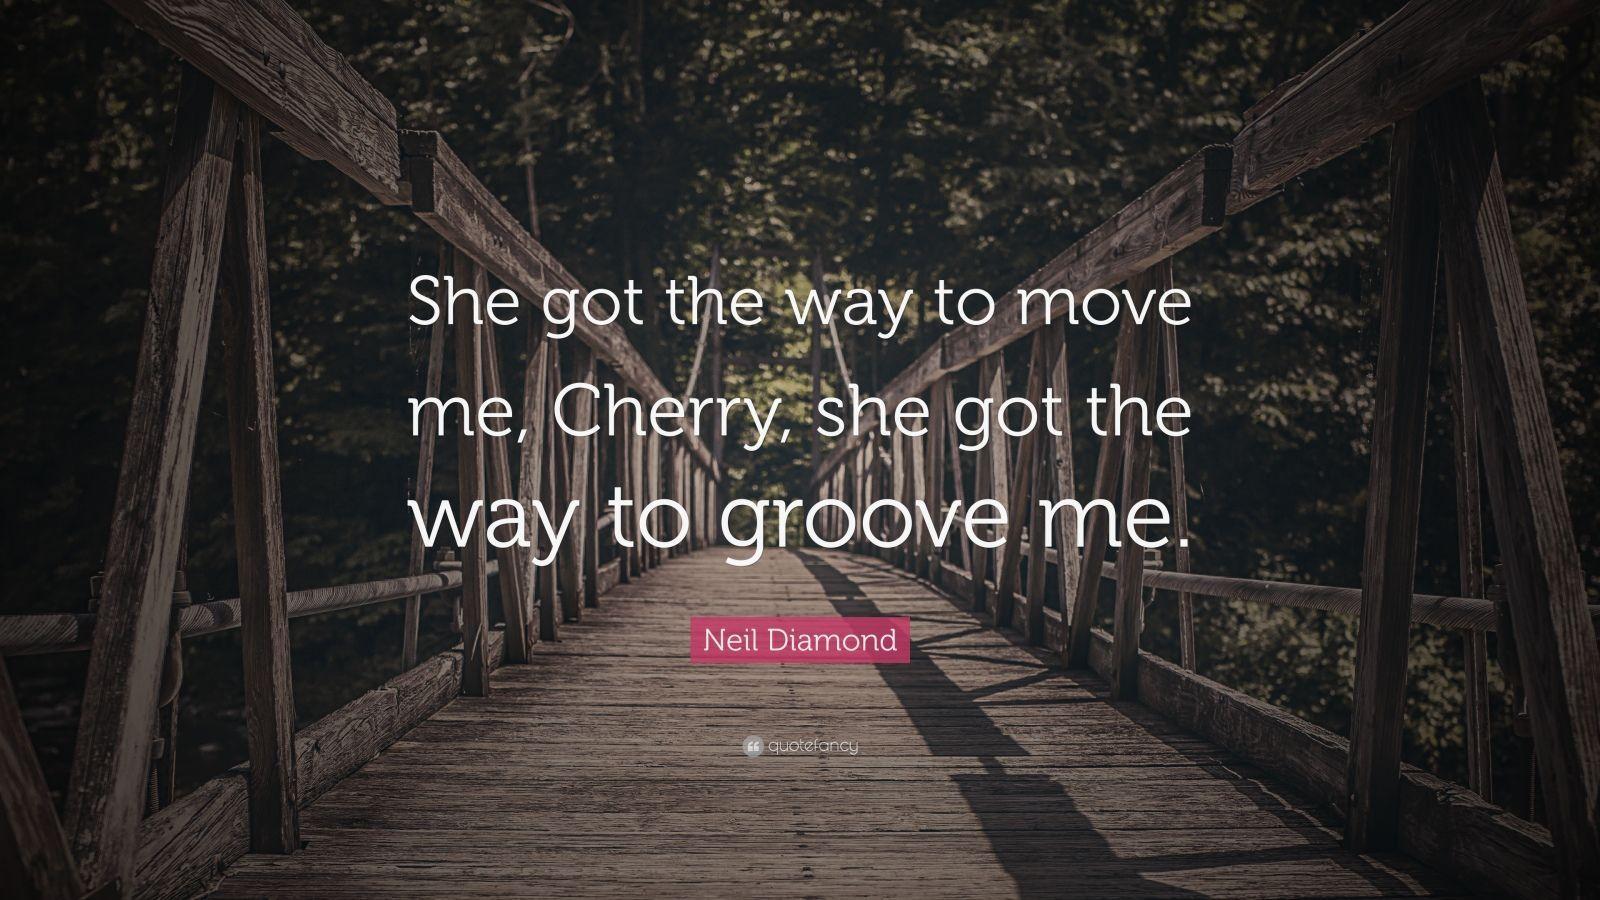 Neil Diamond Quote: “She got the way to move me, Cherry, she got